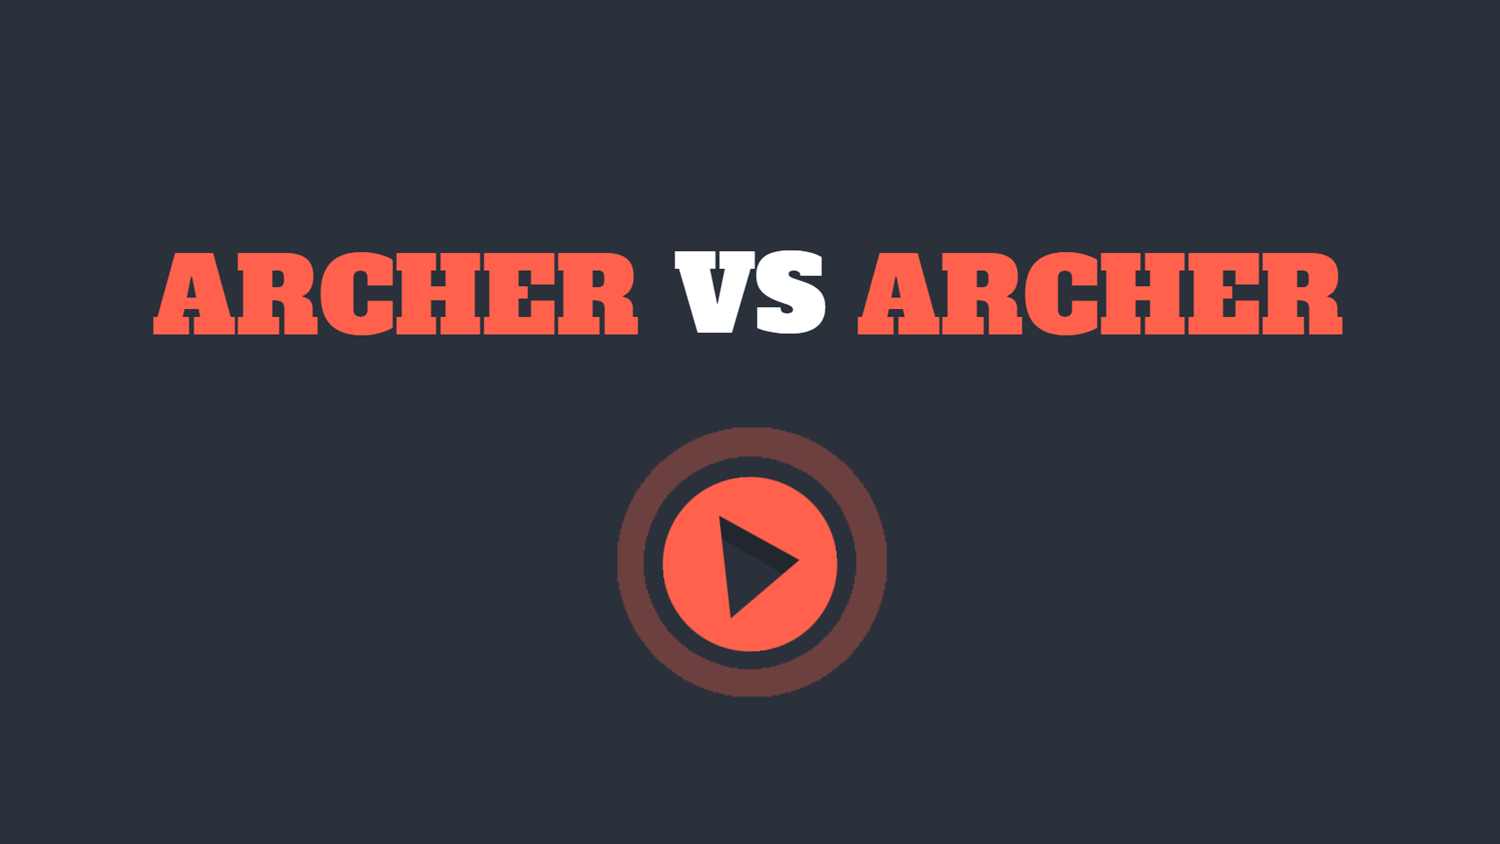 Archer vs Archer Game Welcome Screen Screenshot.